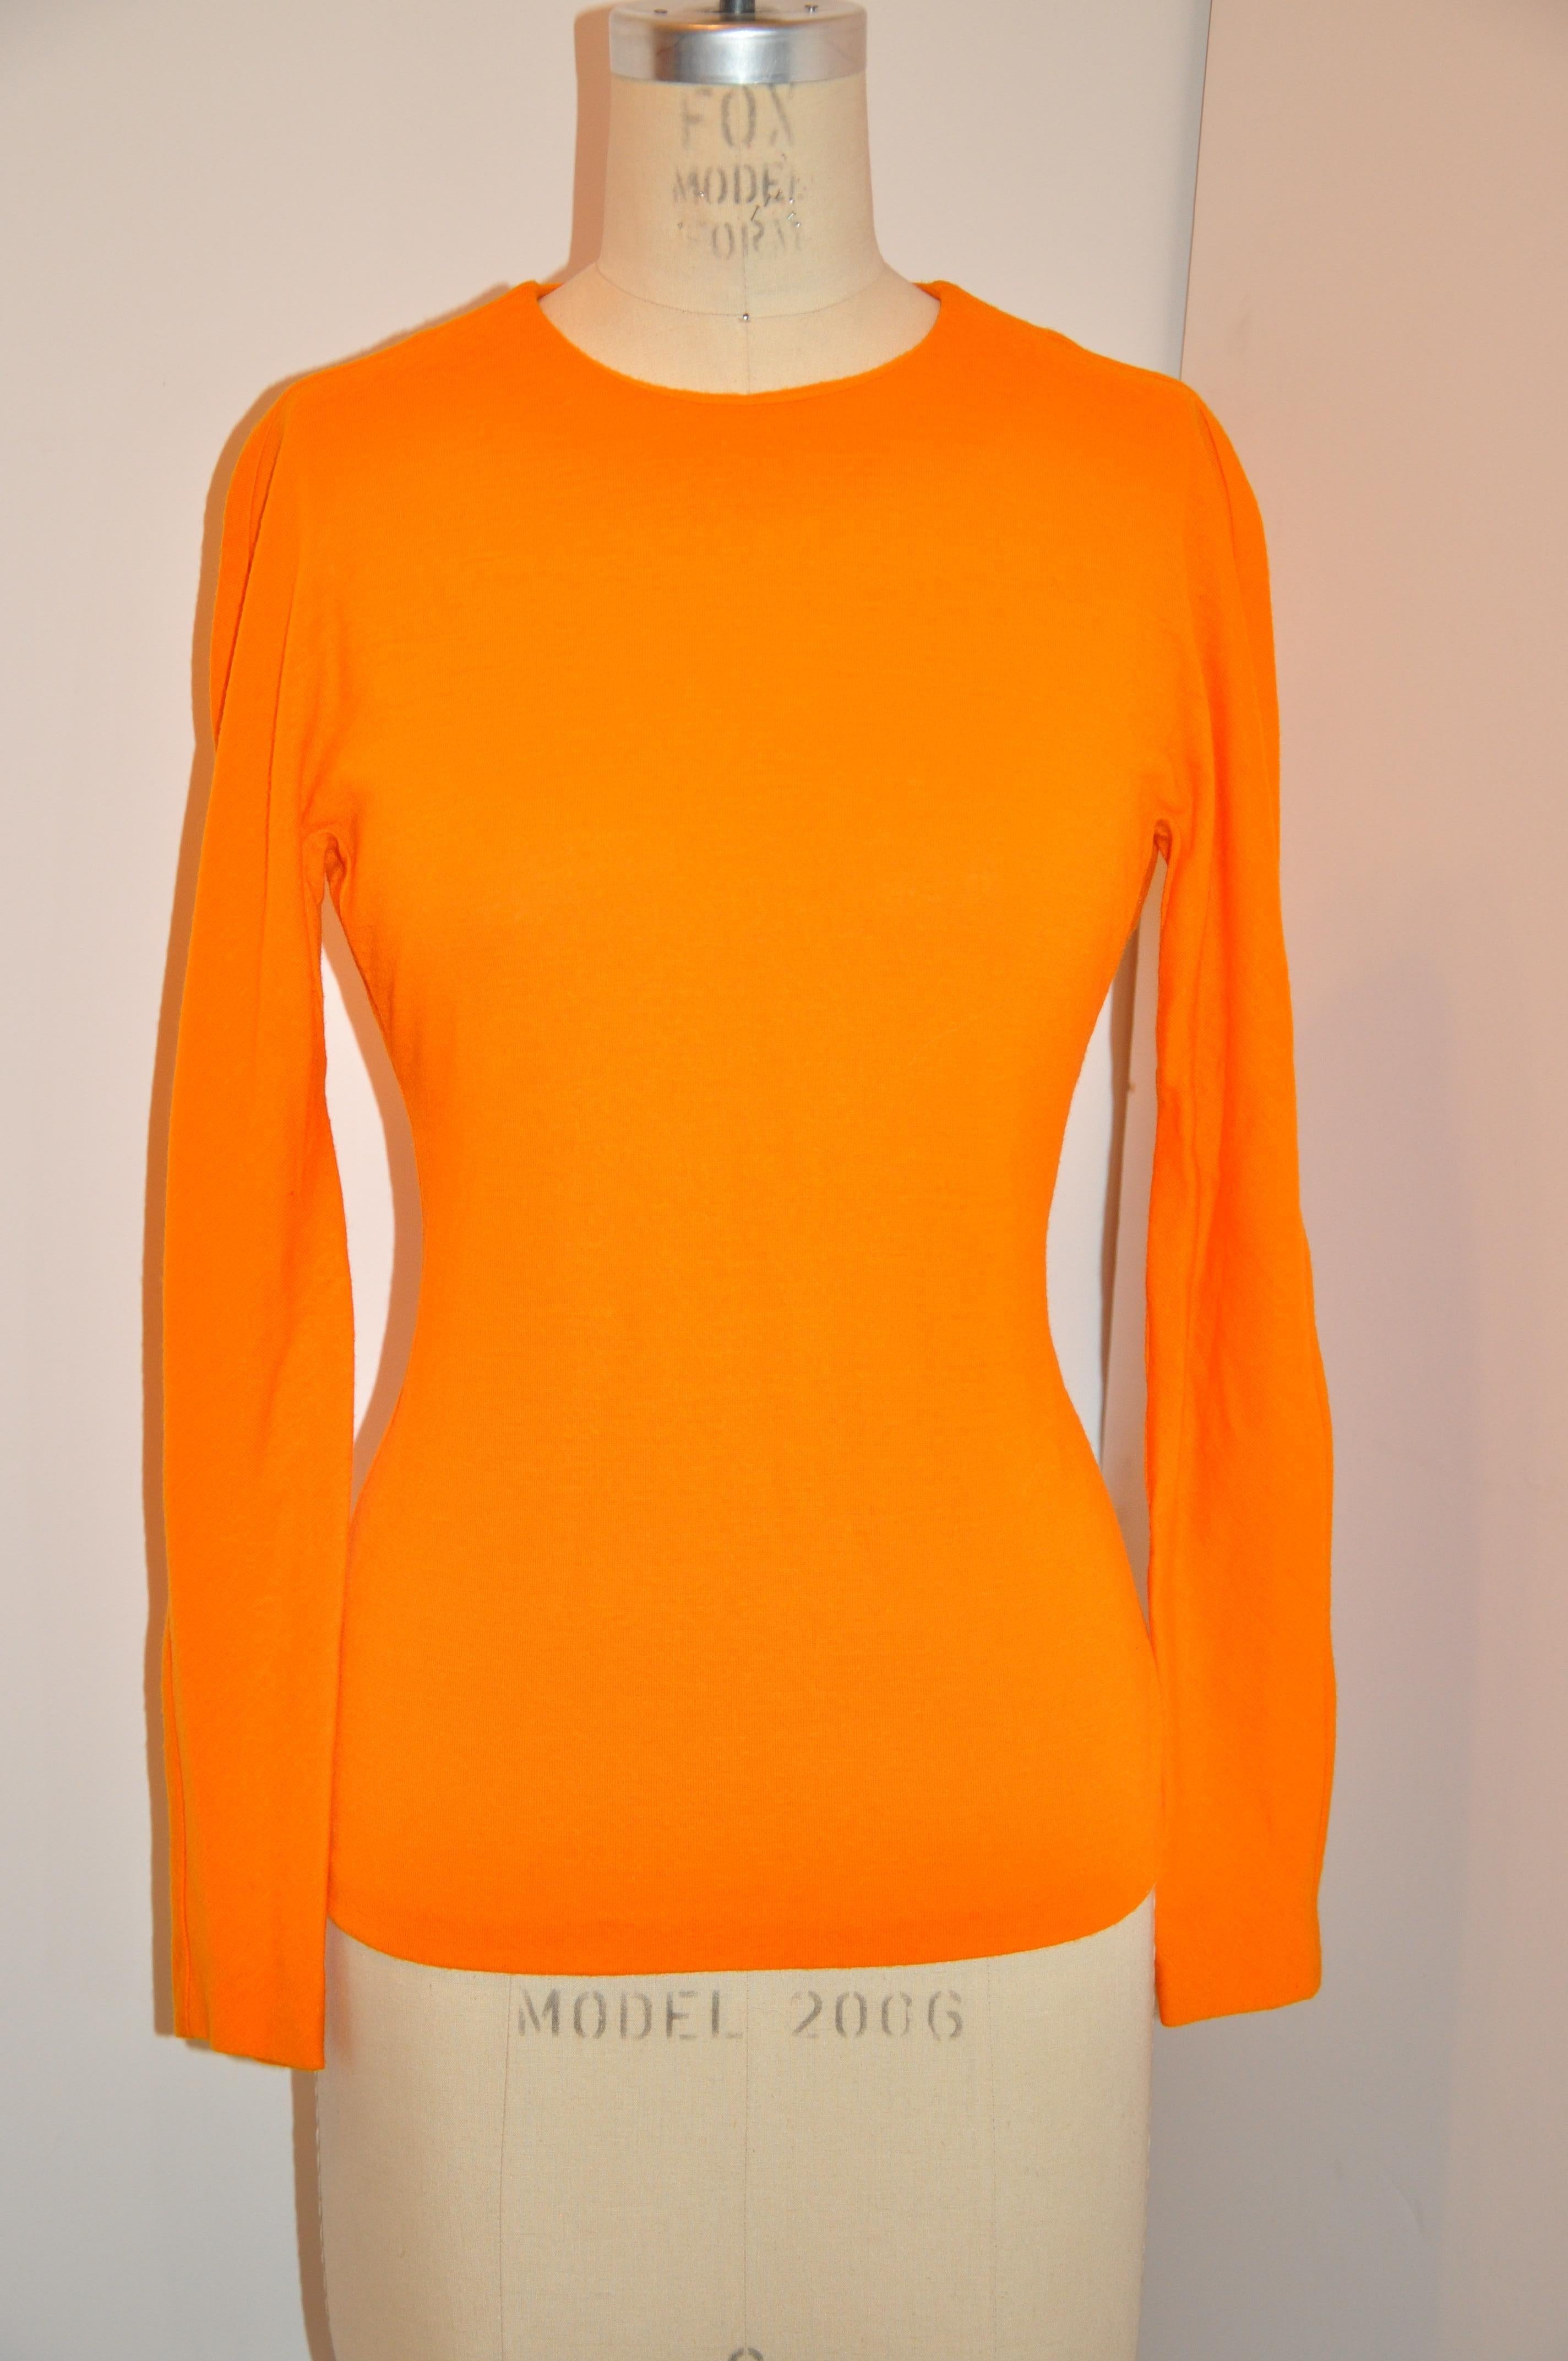 tangerine orange shirt